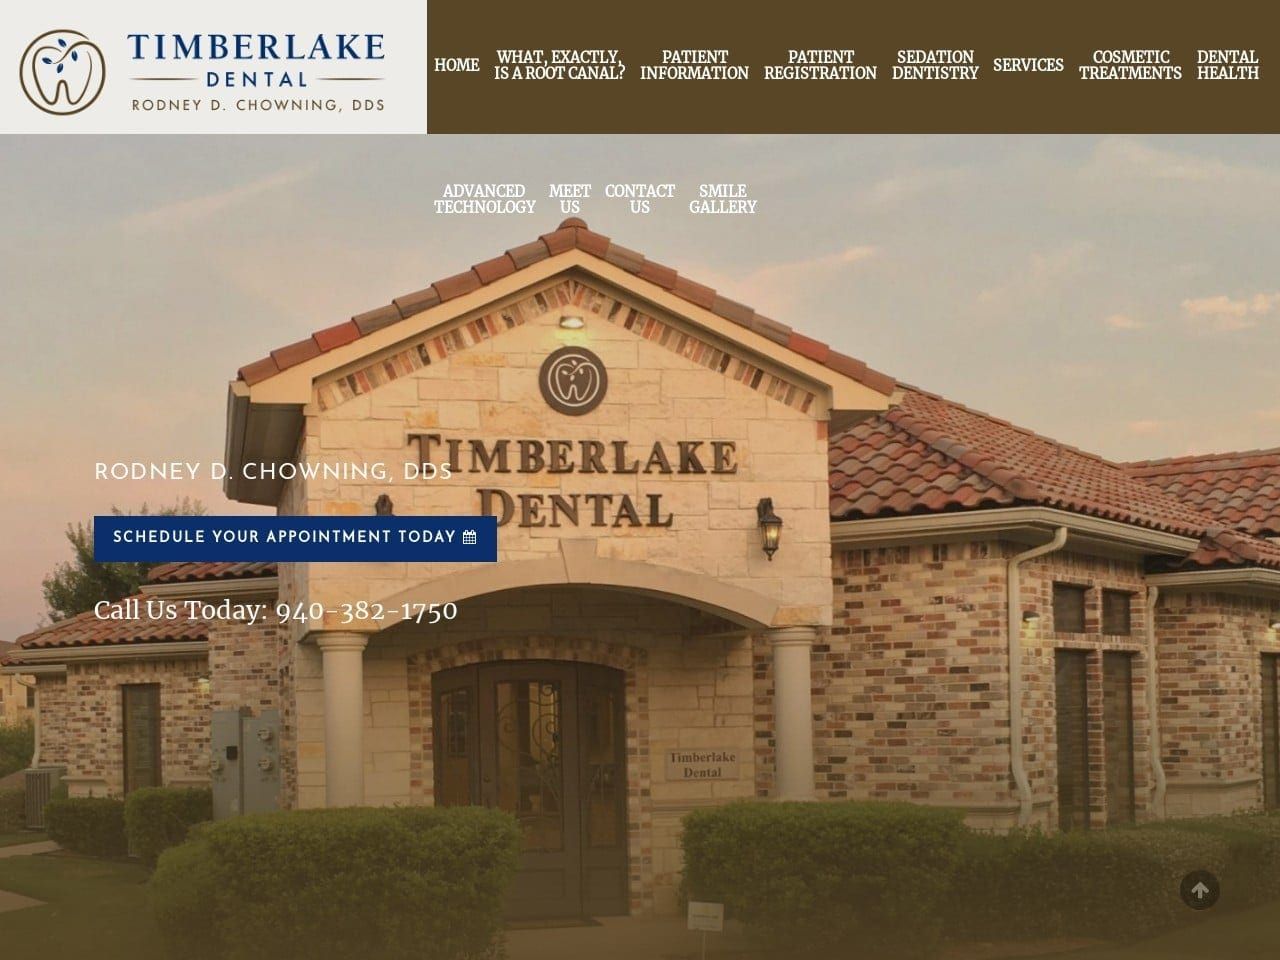 Timberlake Dental Website Screenshot from timberlakedental.com